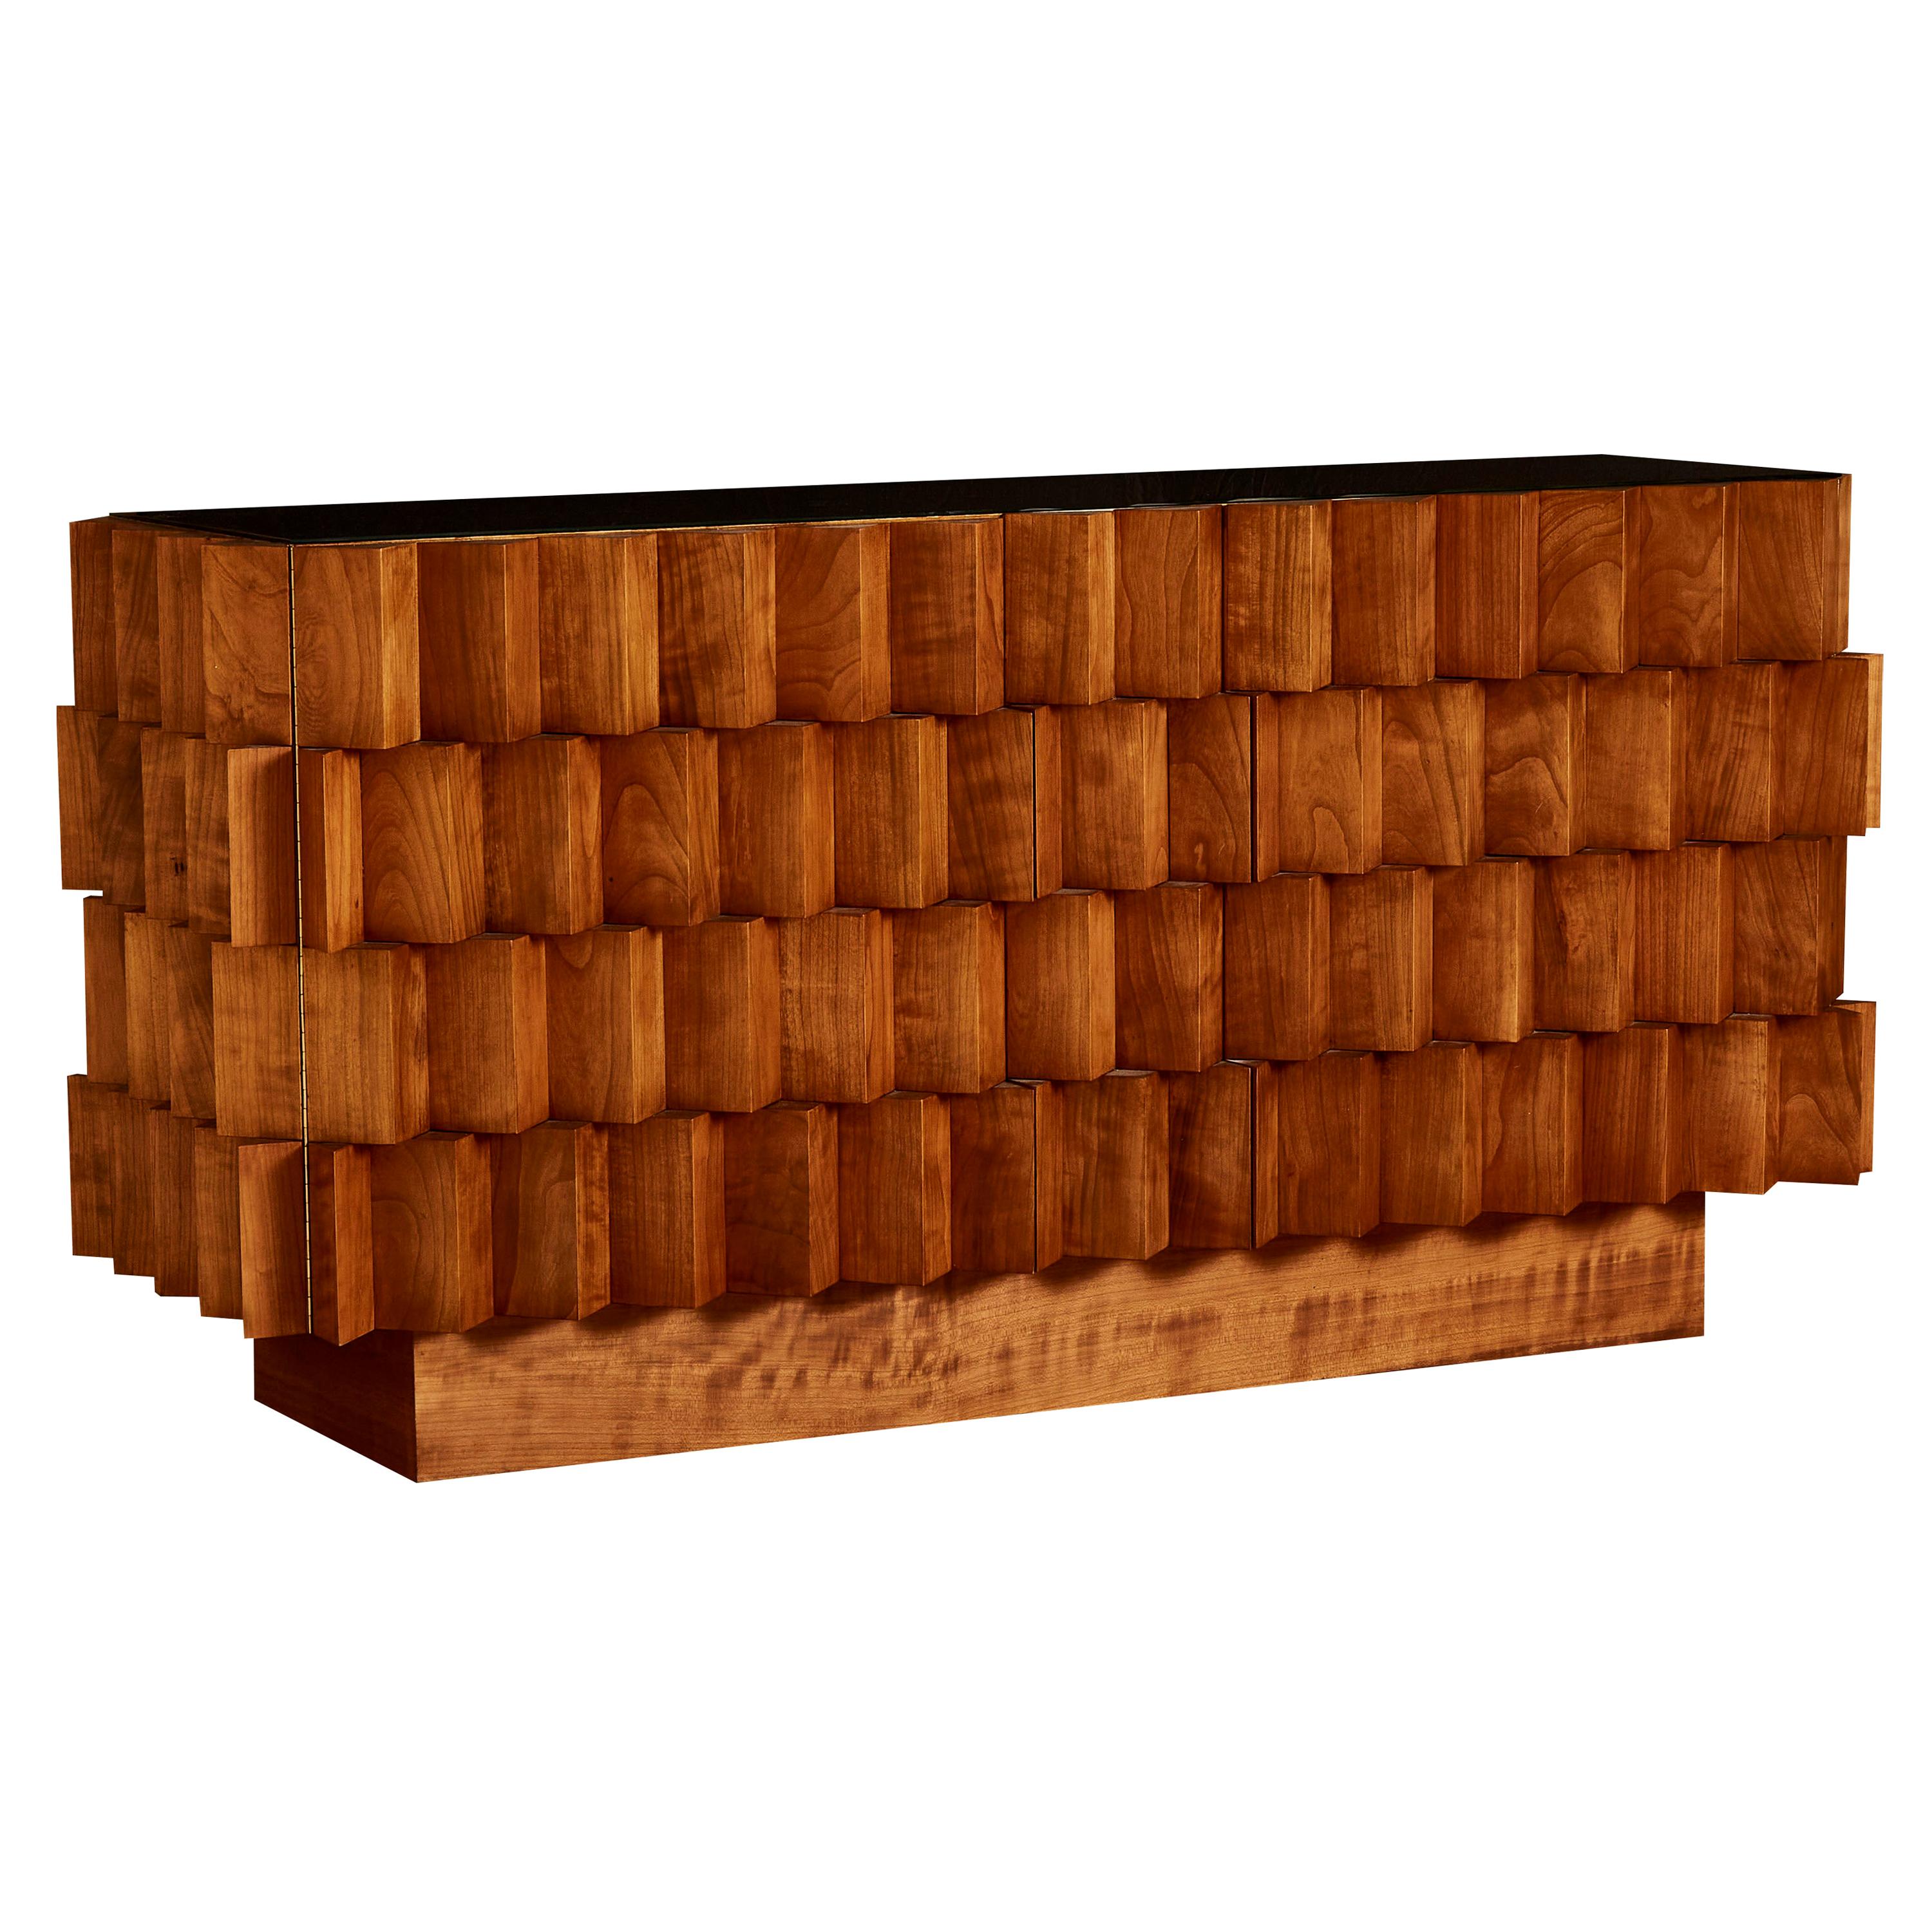 Wooden "Cubic" Sideboard, by Studio Glustin